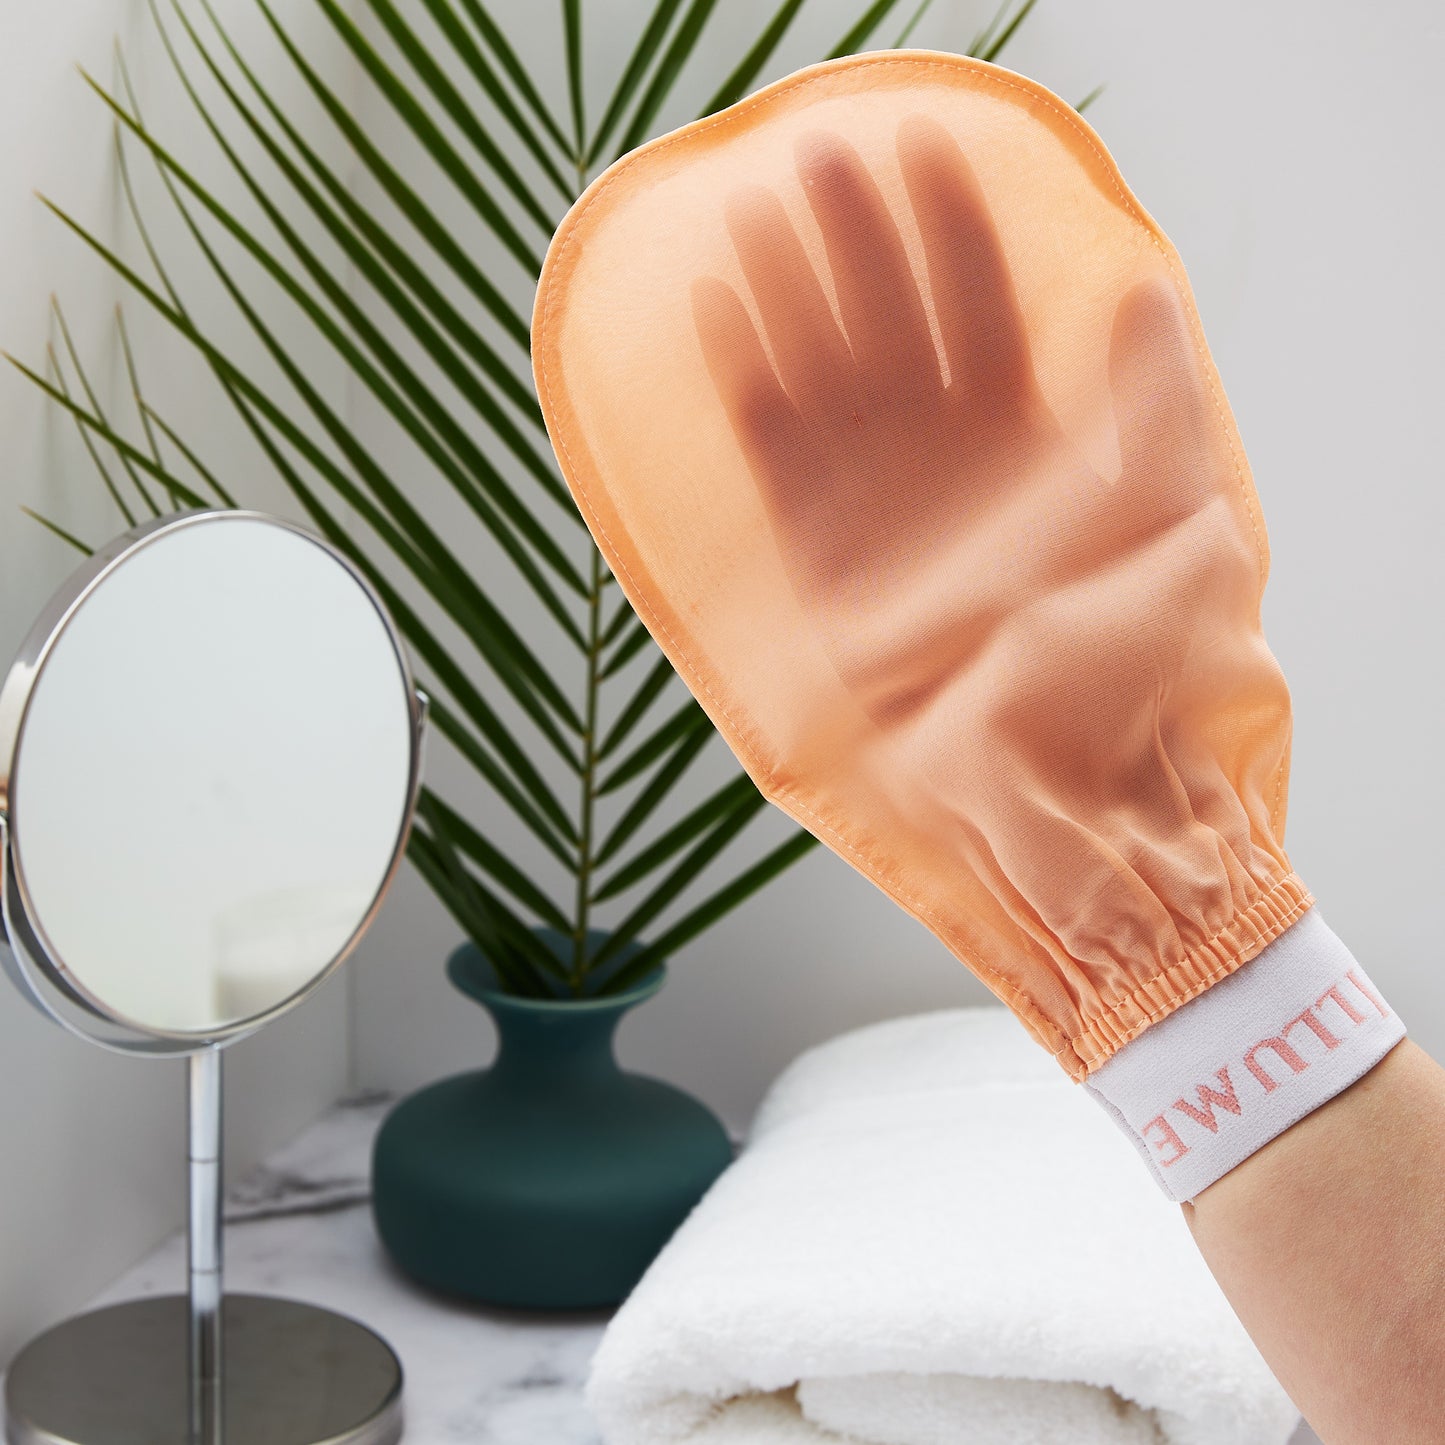 Silk Exfoliating Glove based on Hammam, Turkish baths, Moroccan bath